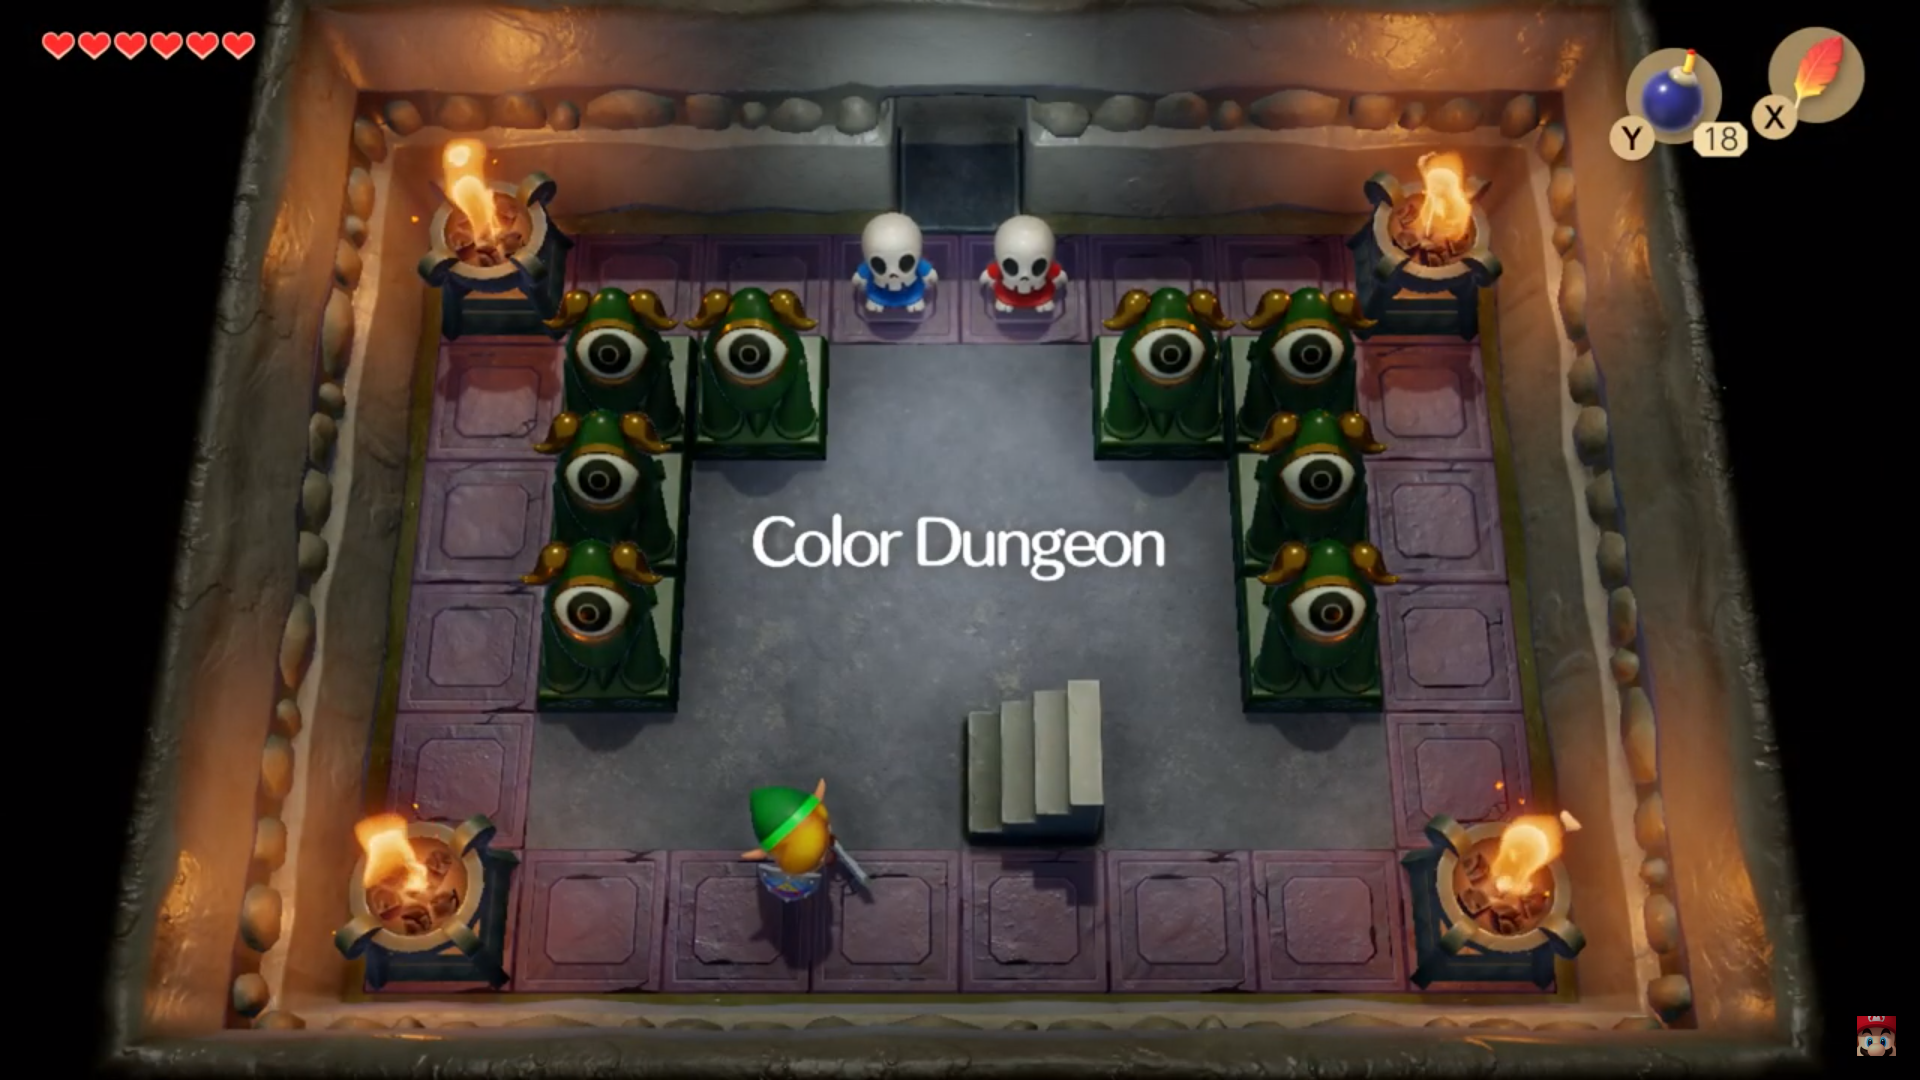 The Color Dungeon Confirmed to be in The Legend of Zelda: Link's Awakening